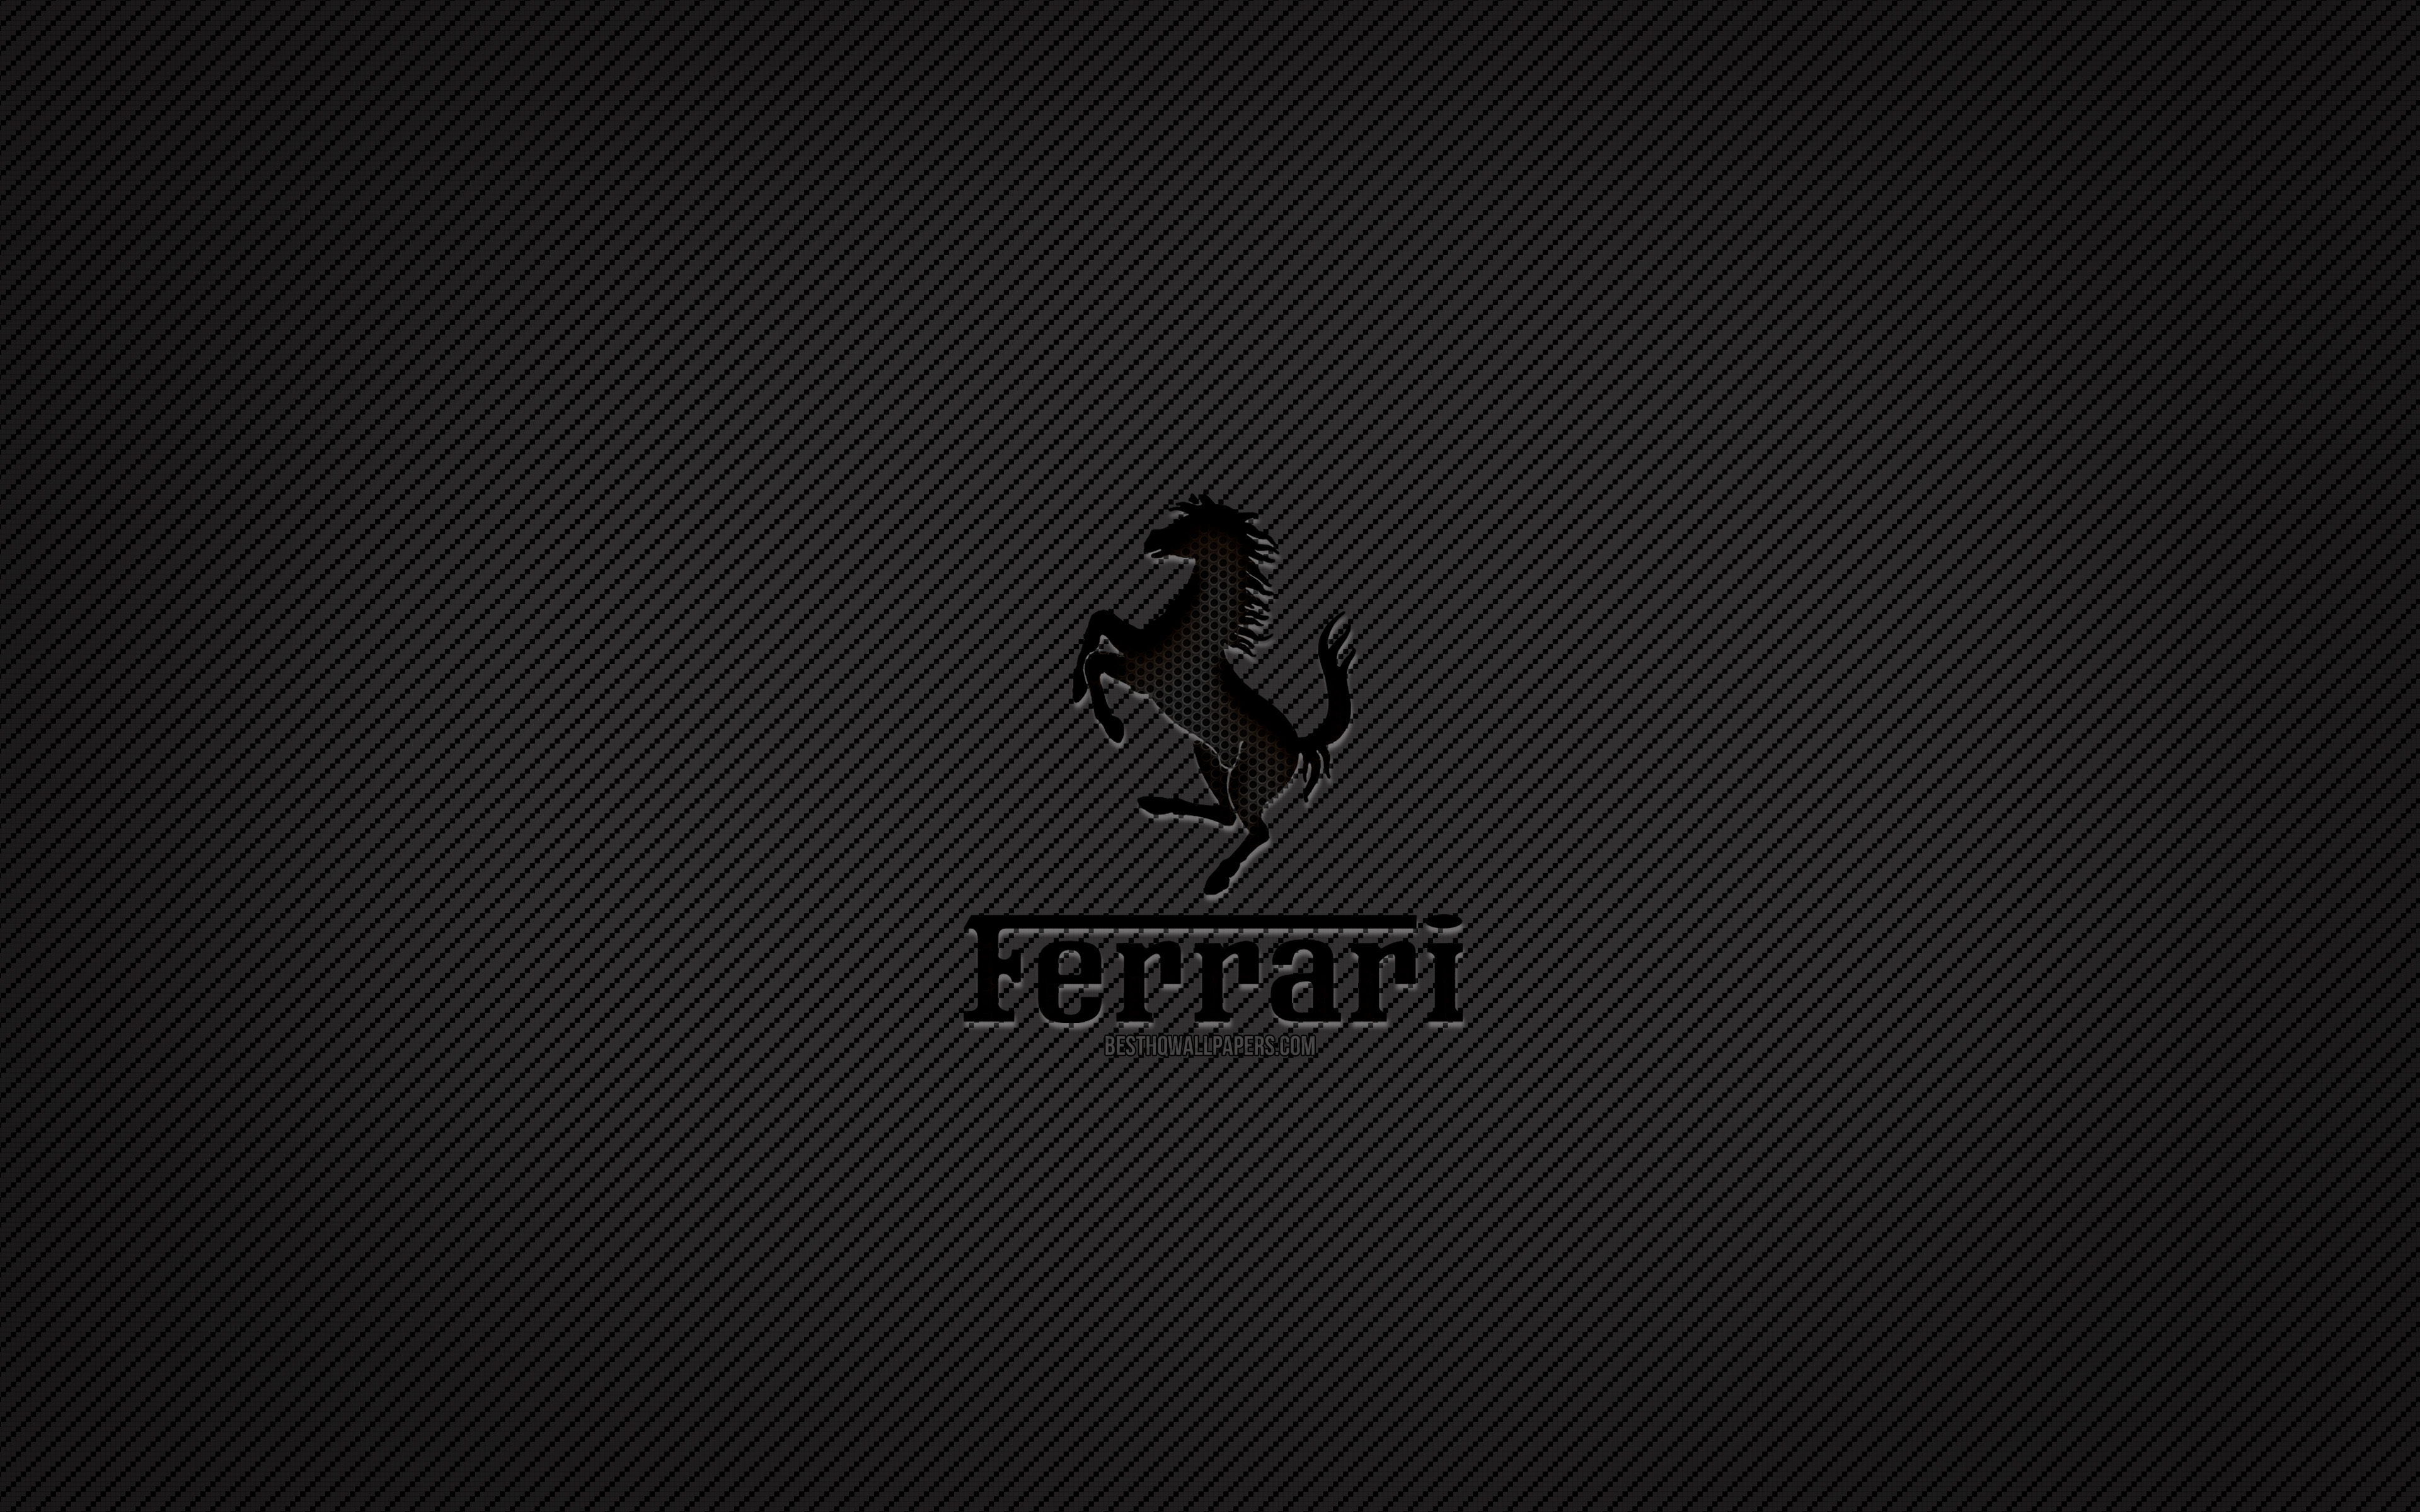 Logo Ferrari Wallpapers